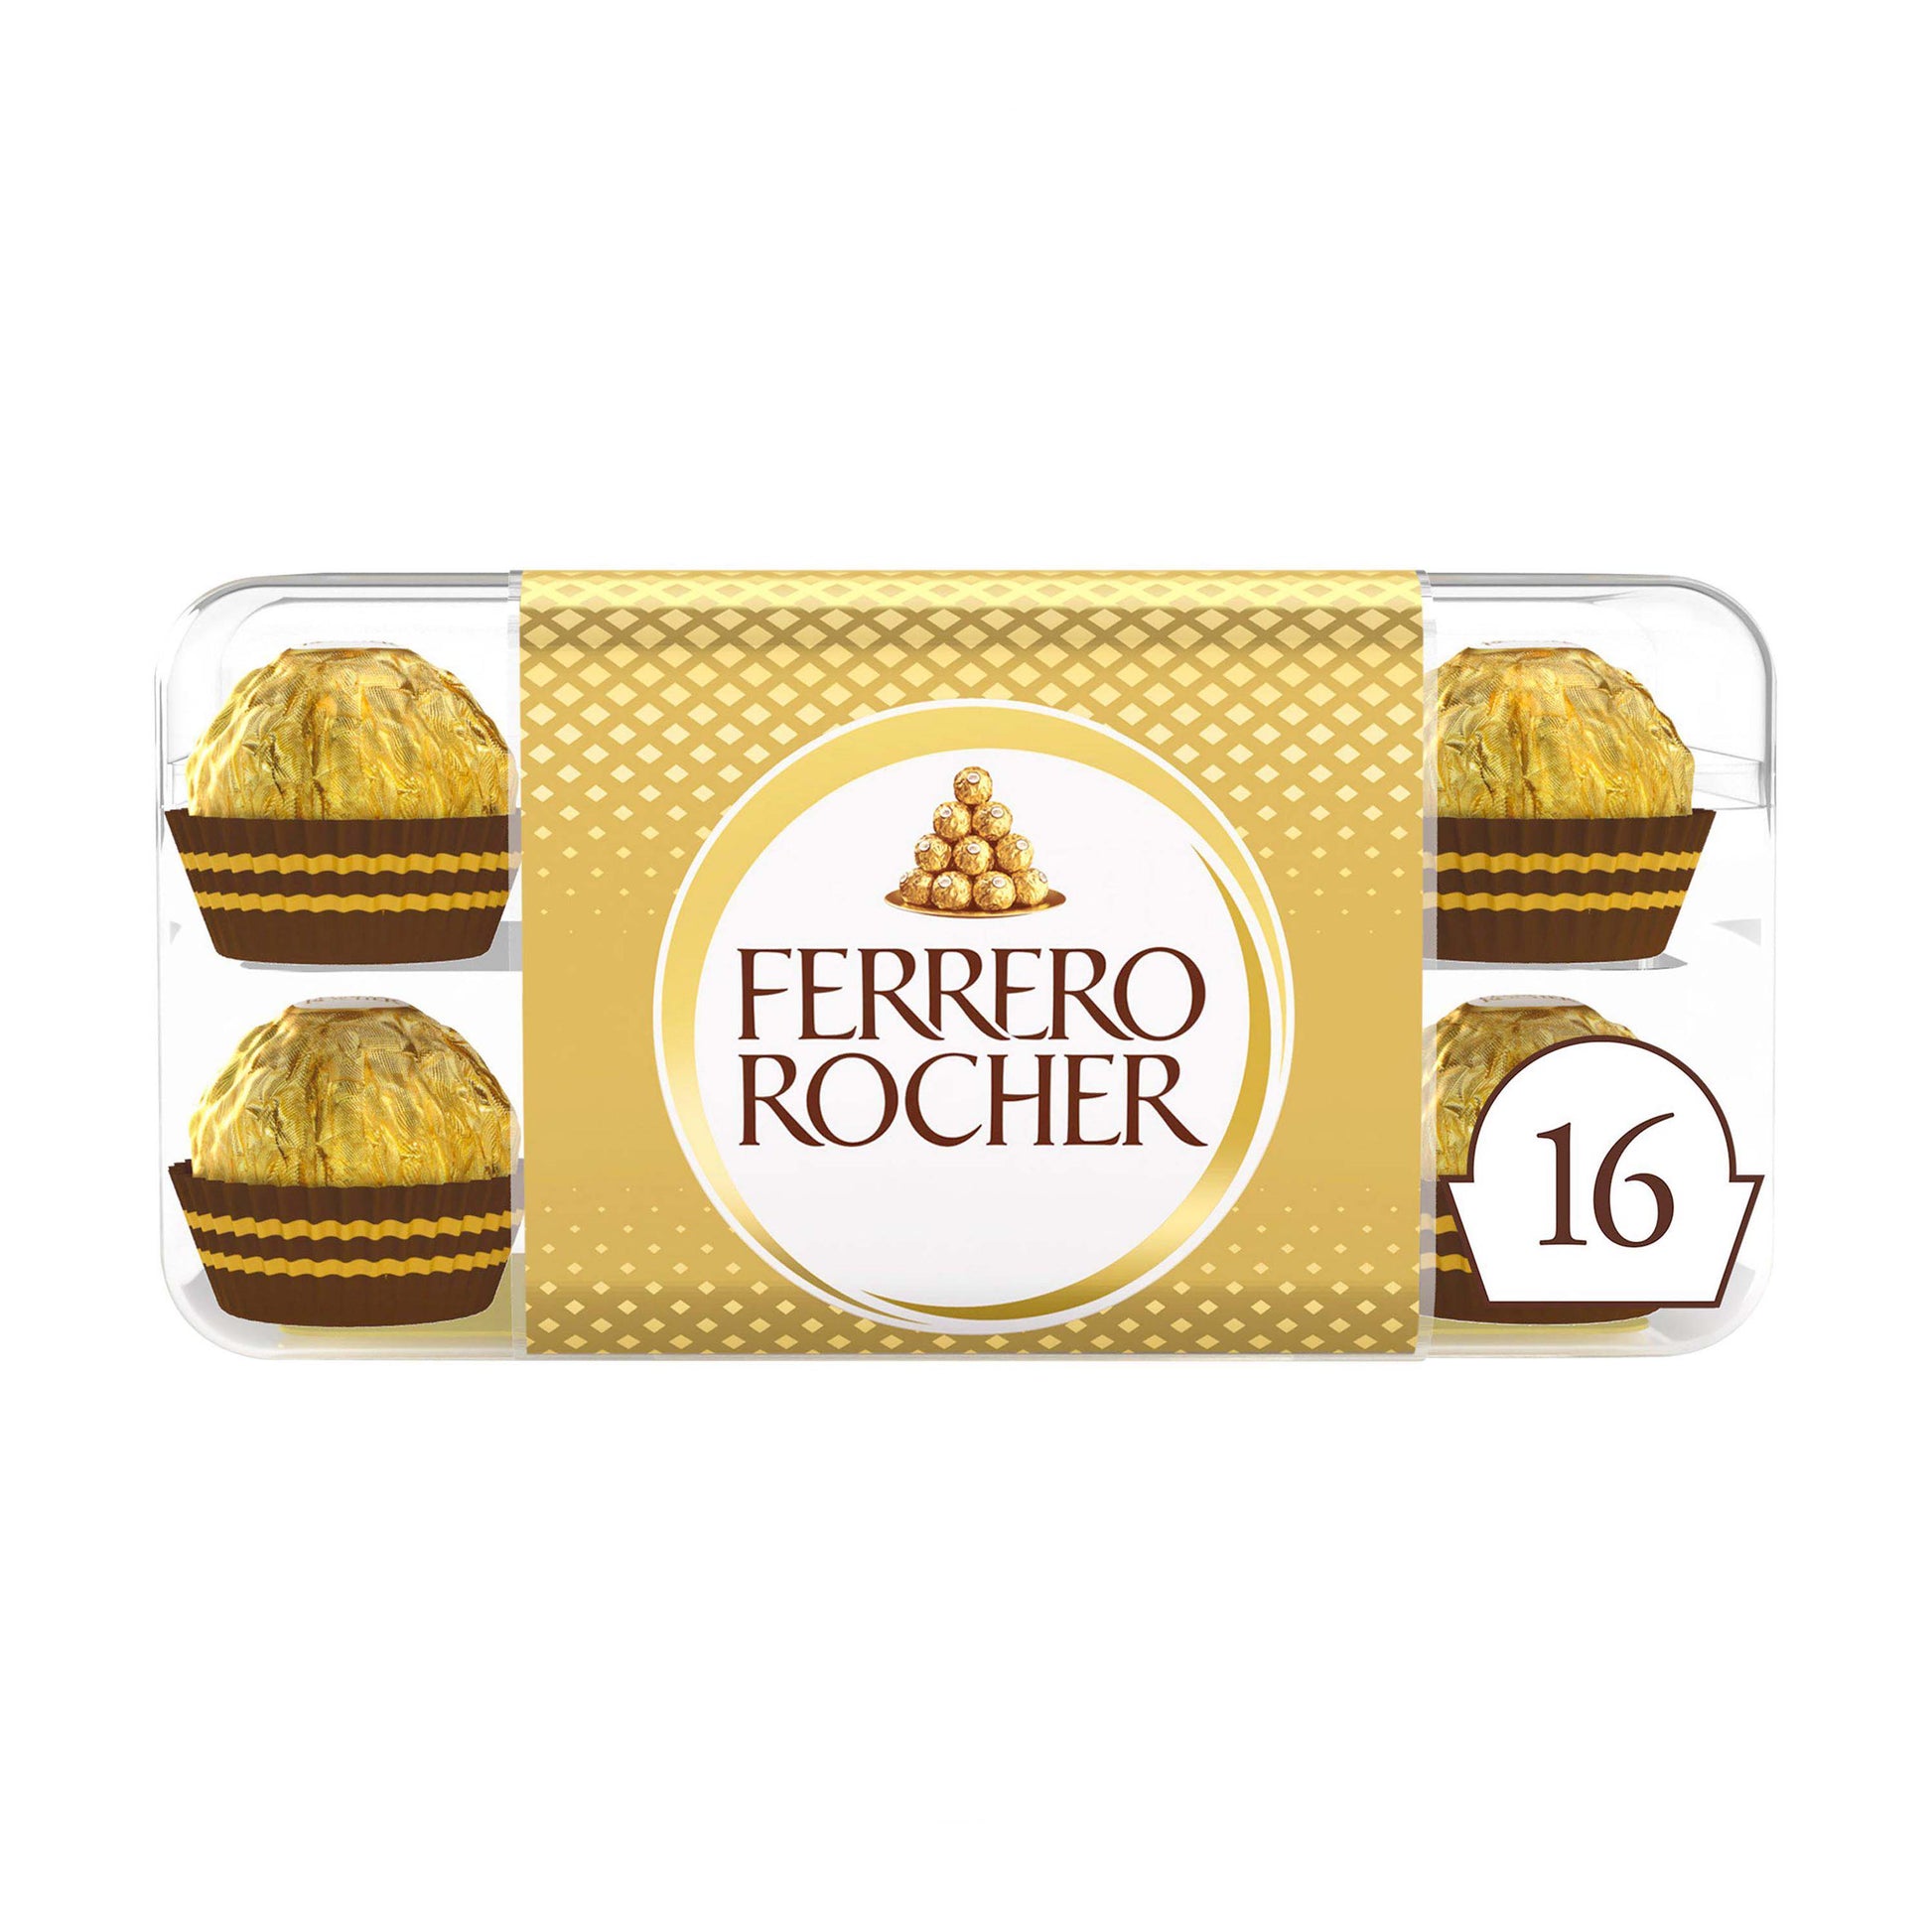 Ferrero Rocher Chocolate Pralines Gift Box 16 Pieces - 200g - Forrero Rocher Gift Message